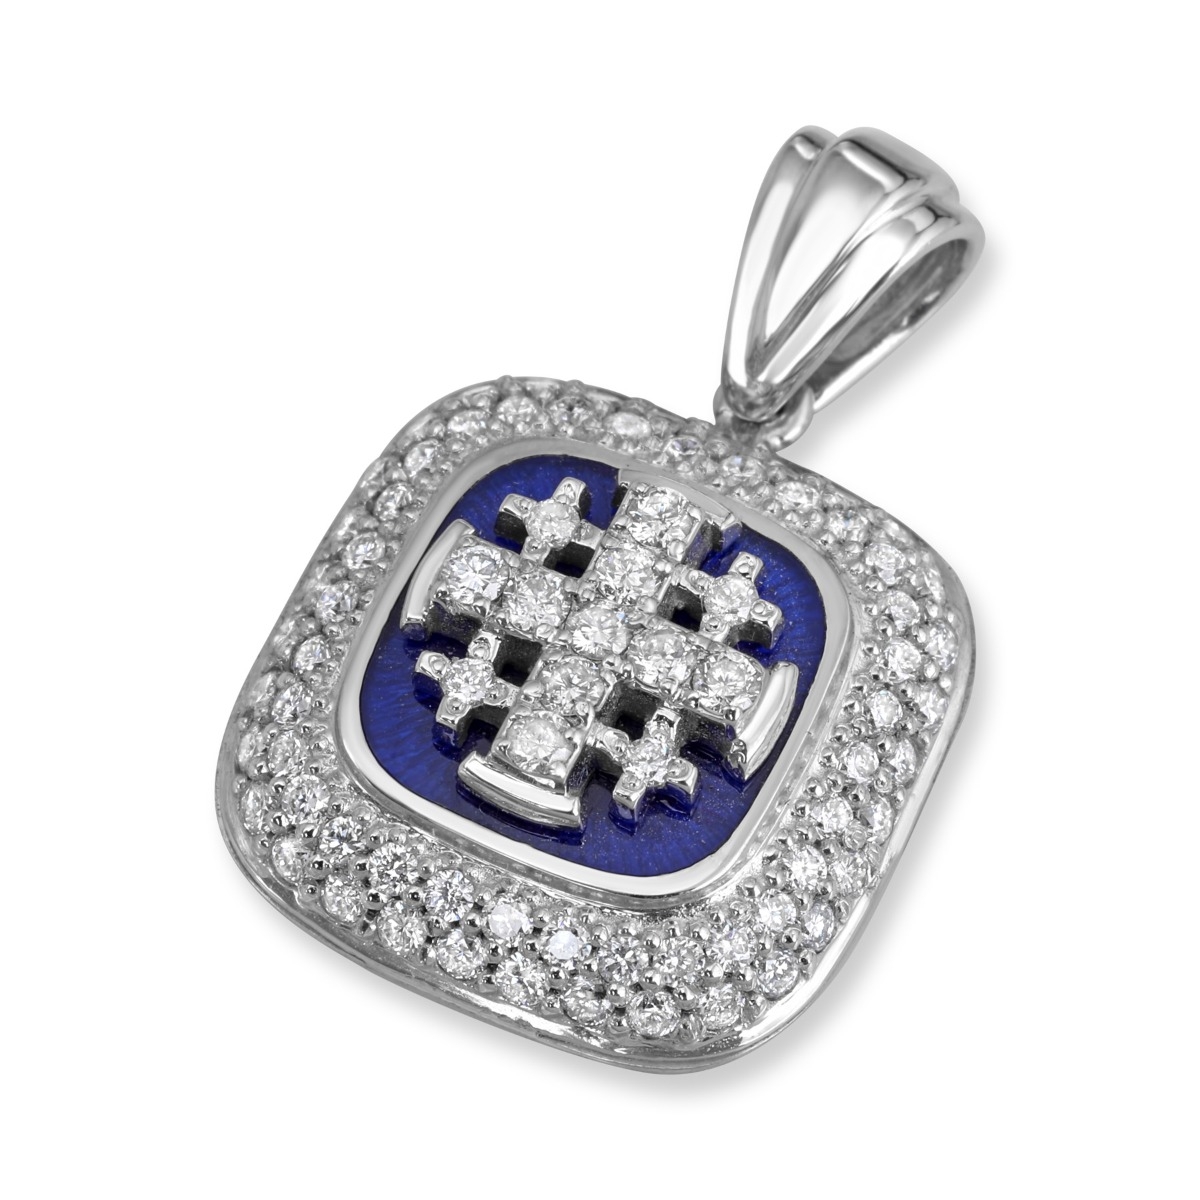 Anbinder Jewelry 14K White Gold and Blue Enamel Vintage Style Pavé Cushion-Shaped Jerusalem Cross Pendant with 77 Diamonds - 1